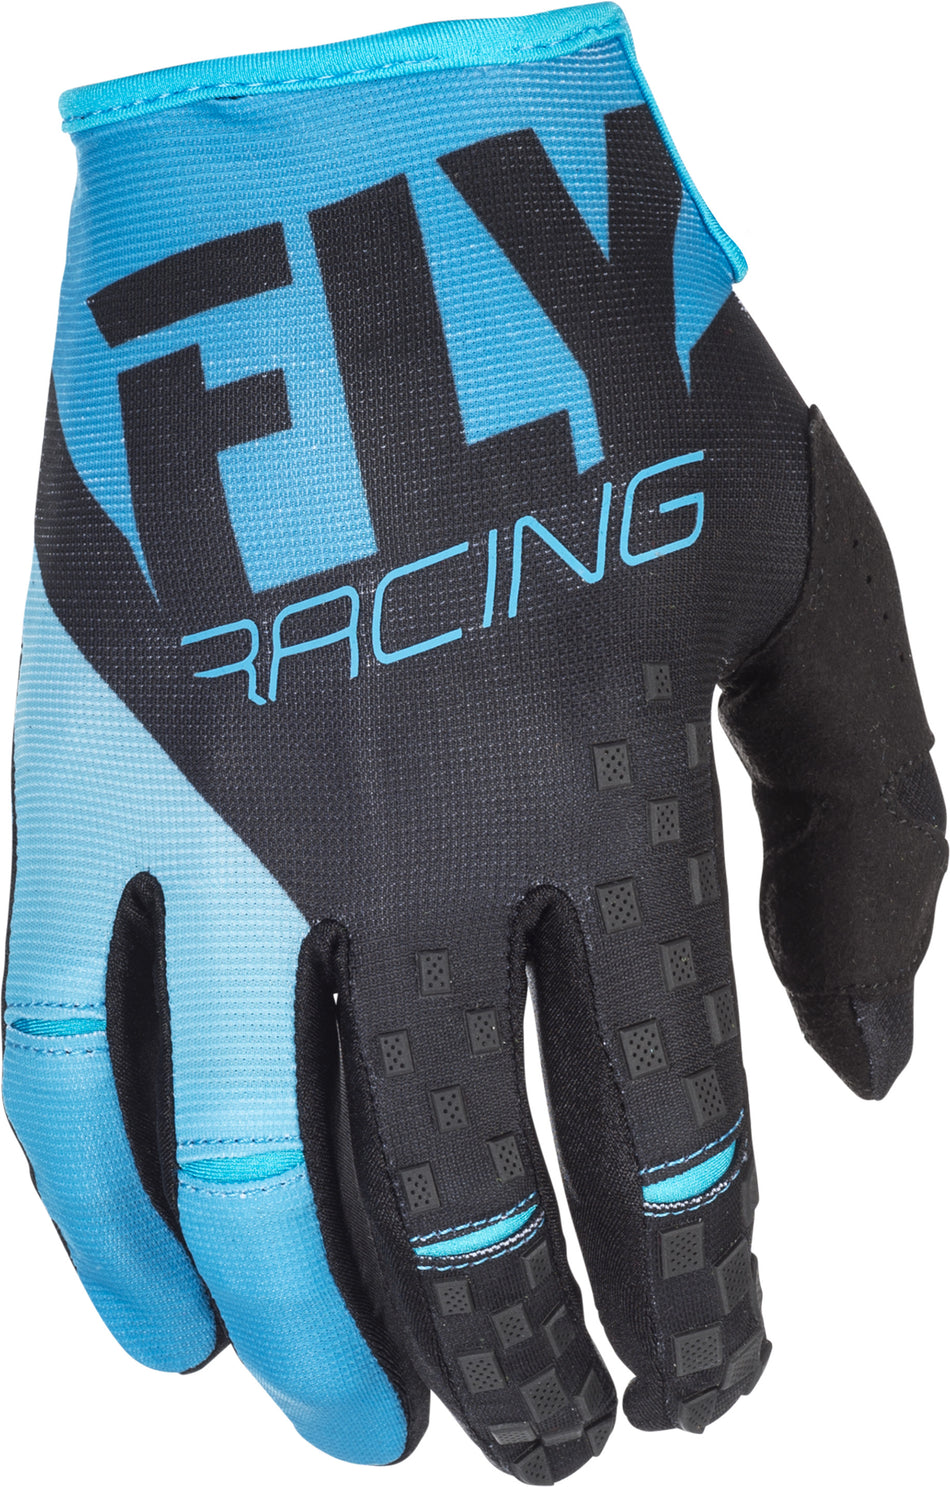 FLY RACING Kinetic Gloves Blue/Black Sz 12 371-41112